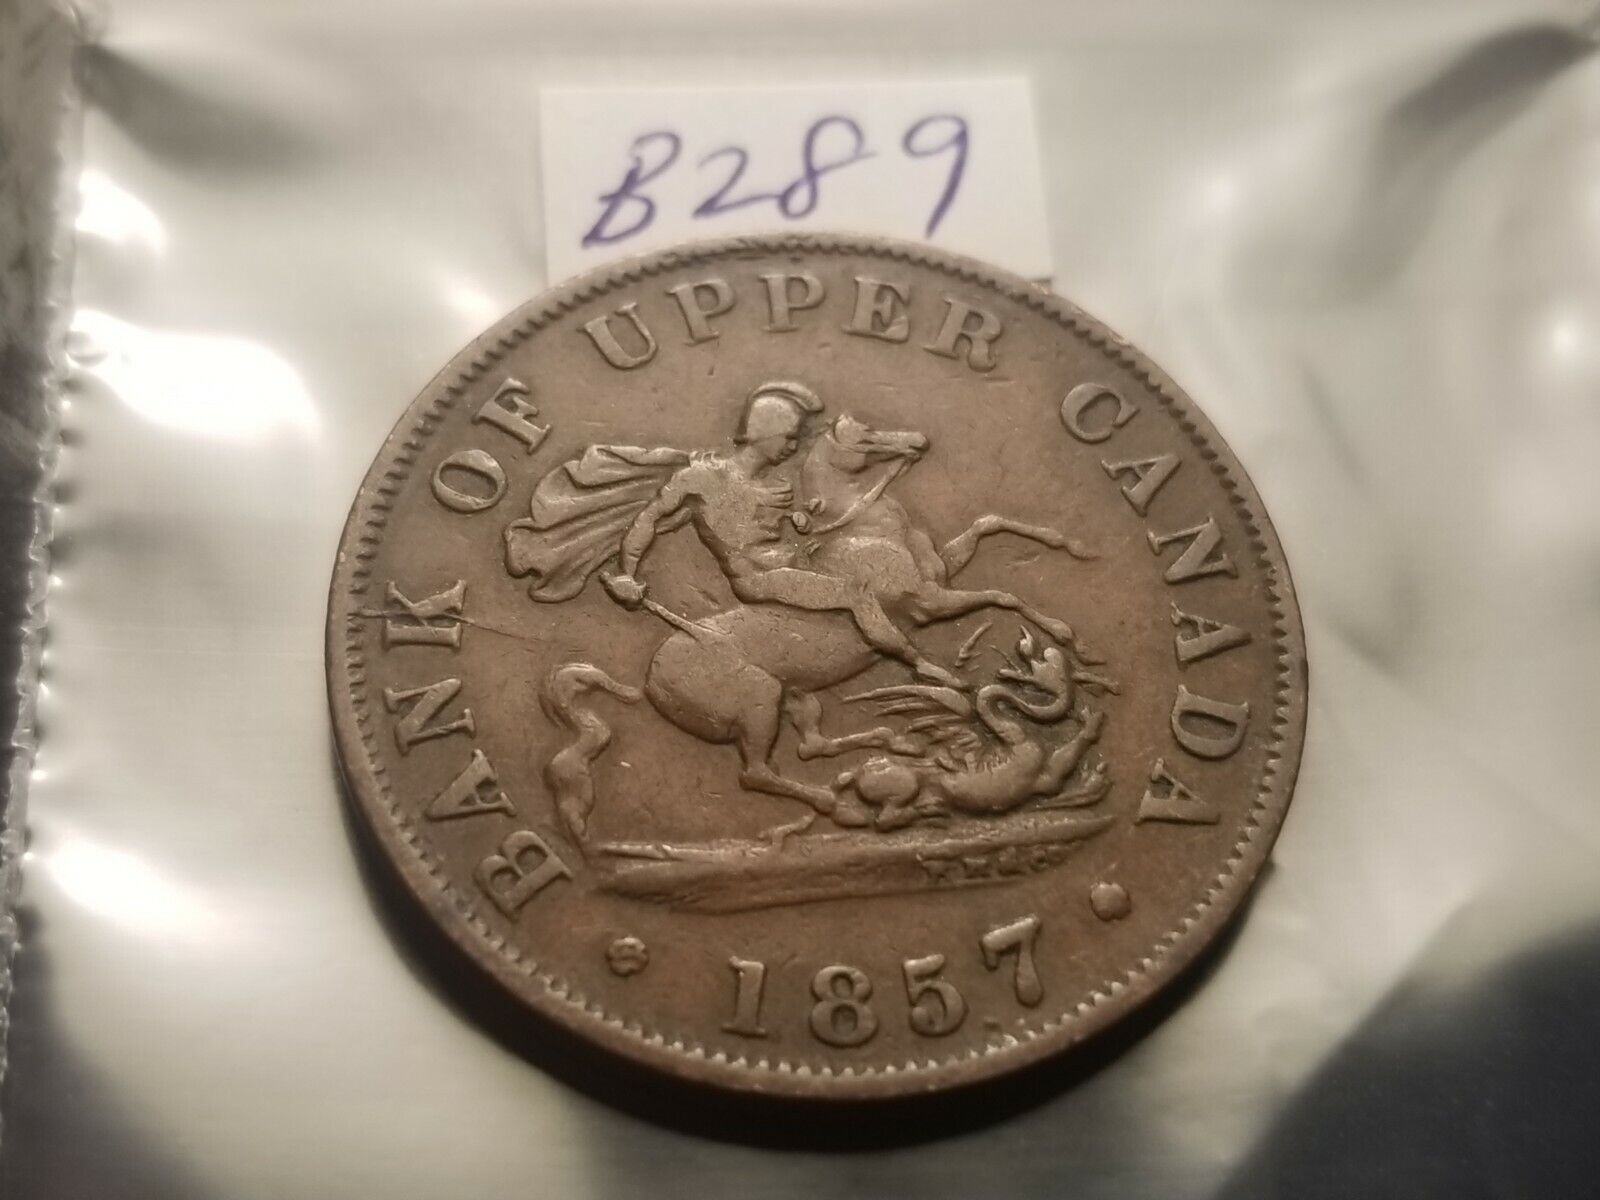 1857 Bank Of Upper Canada Half Penny Token High Grade Id#b289.